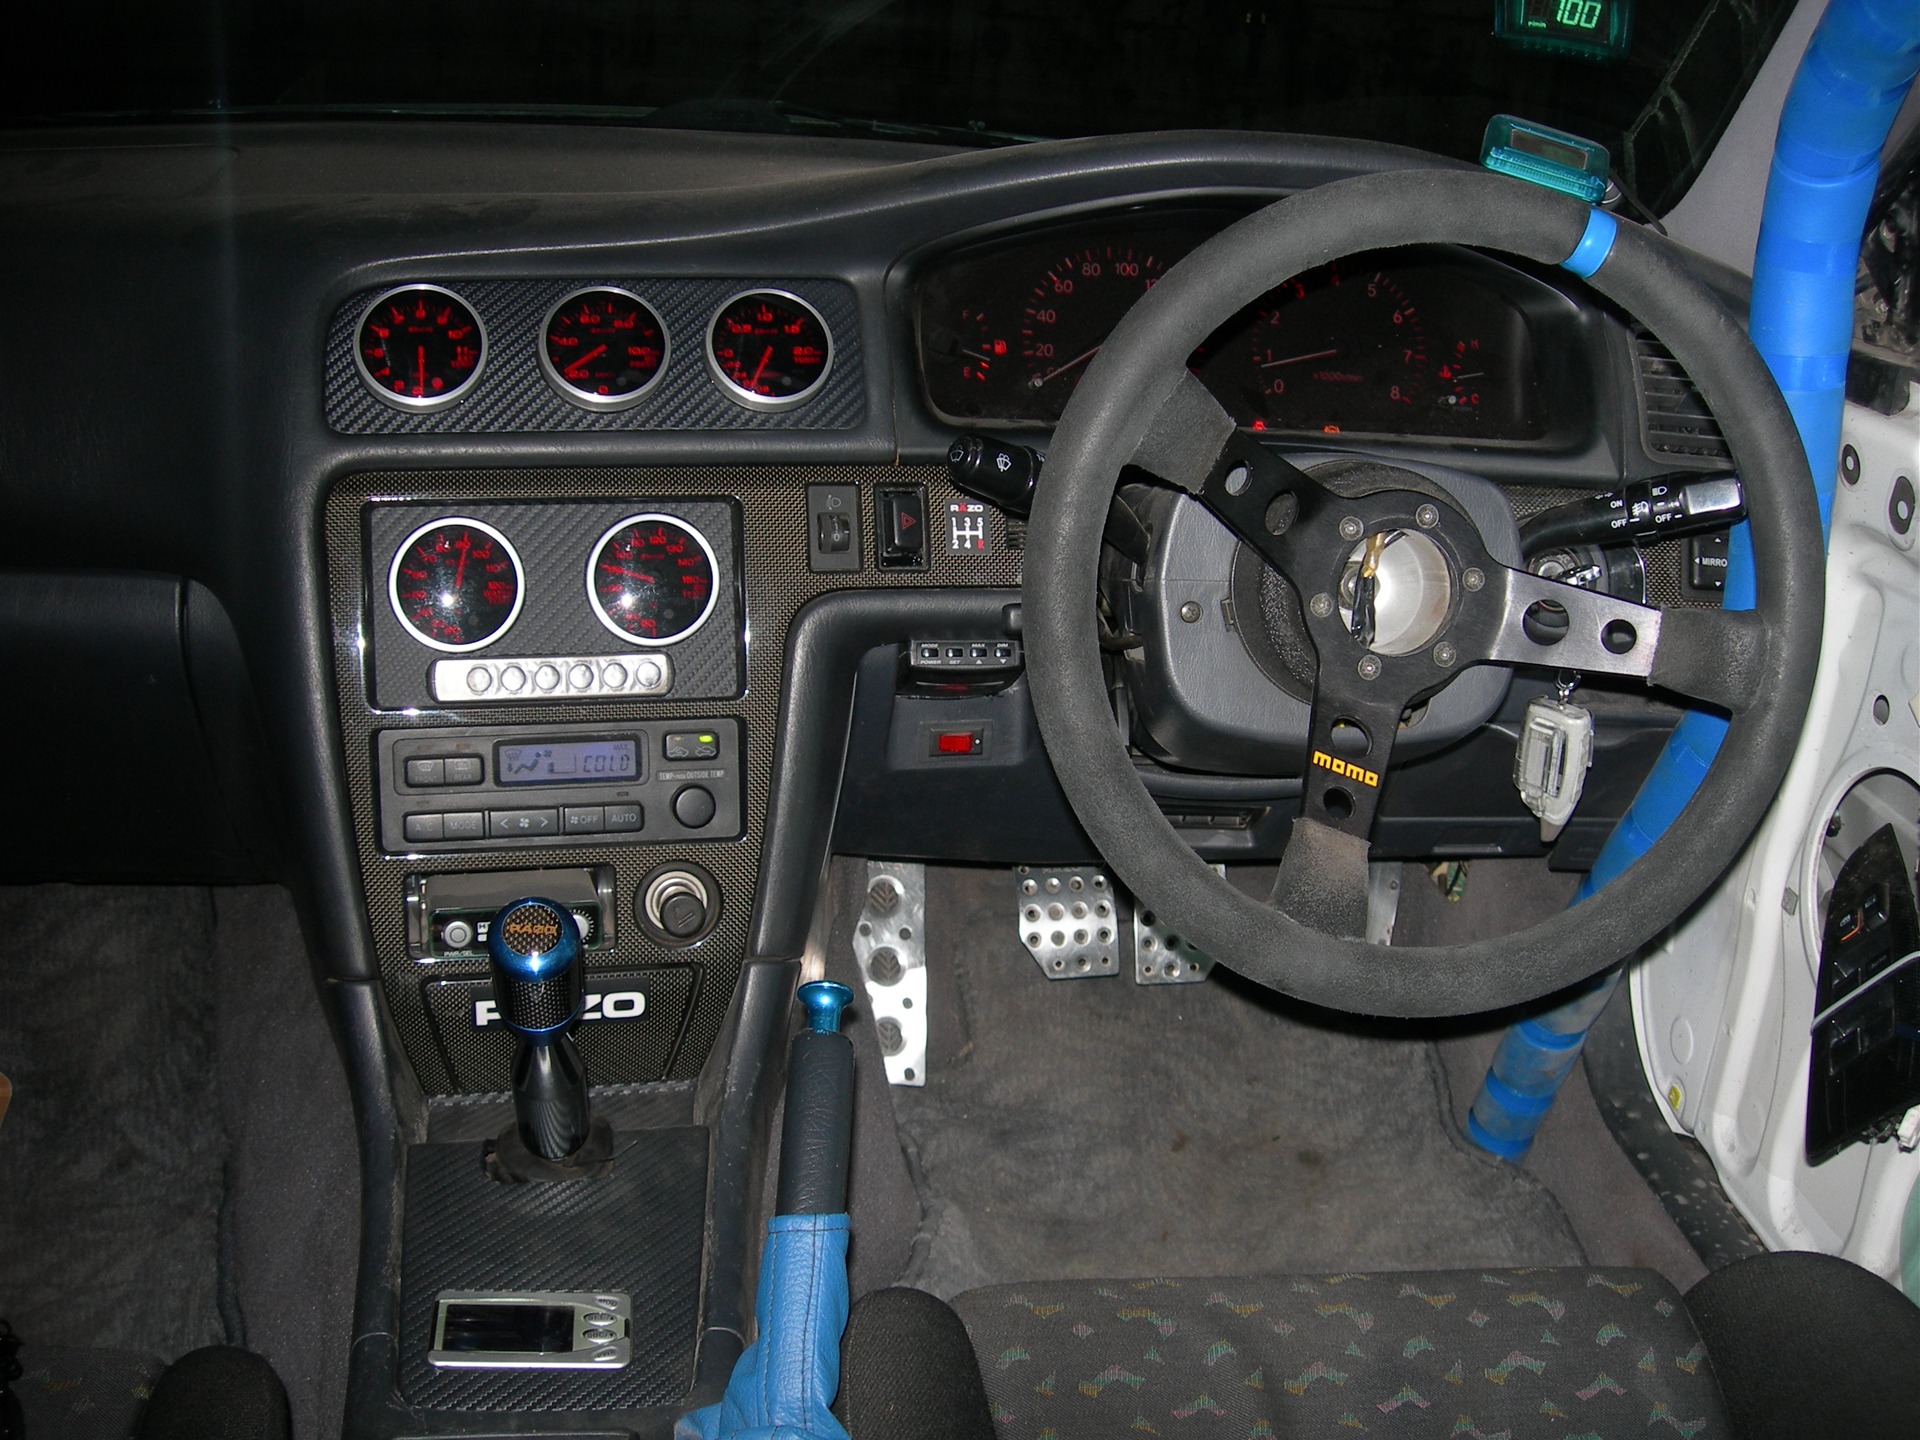  6 2010 Toyota Chaser 25 1997 